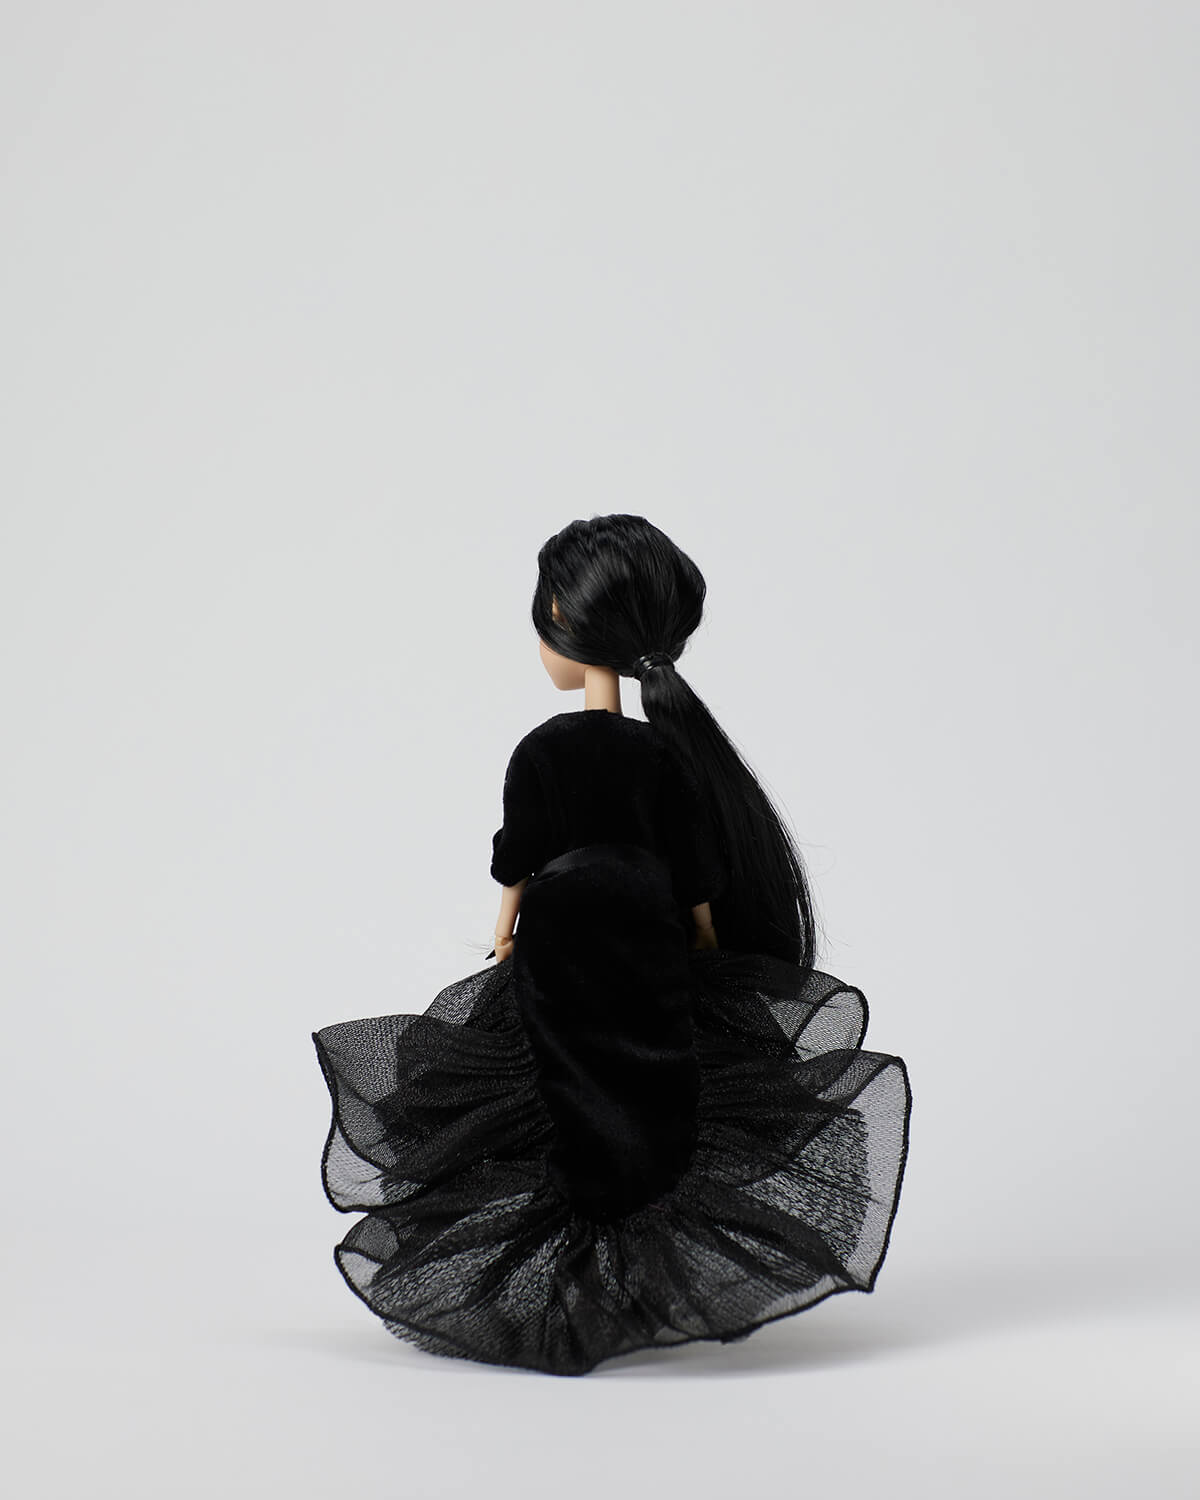 Ning Lau Handmade Doll - Black Ruffle Dress